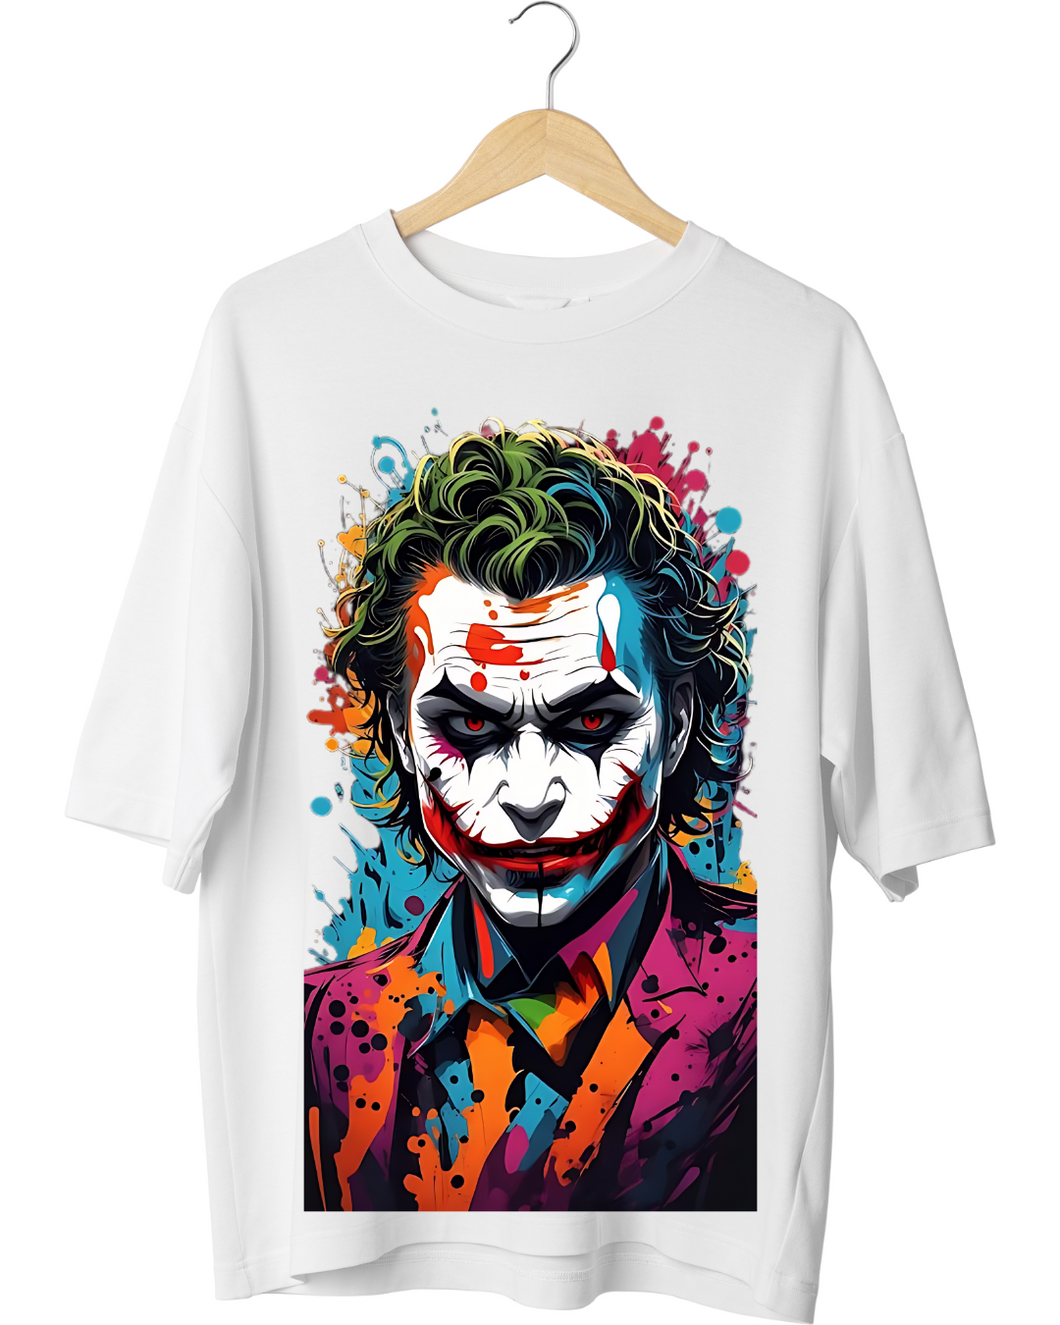 Men's Oversized Joker Pop art Print T-shirt